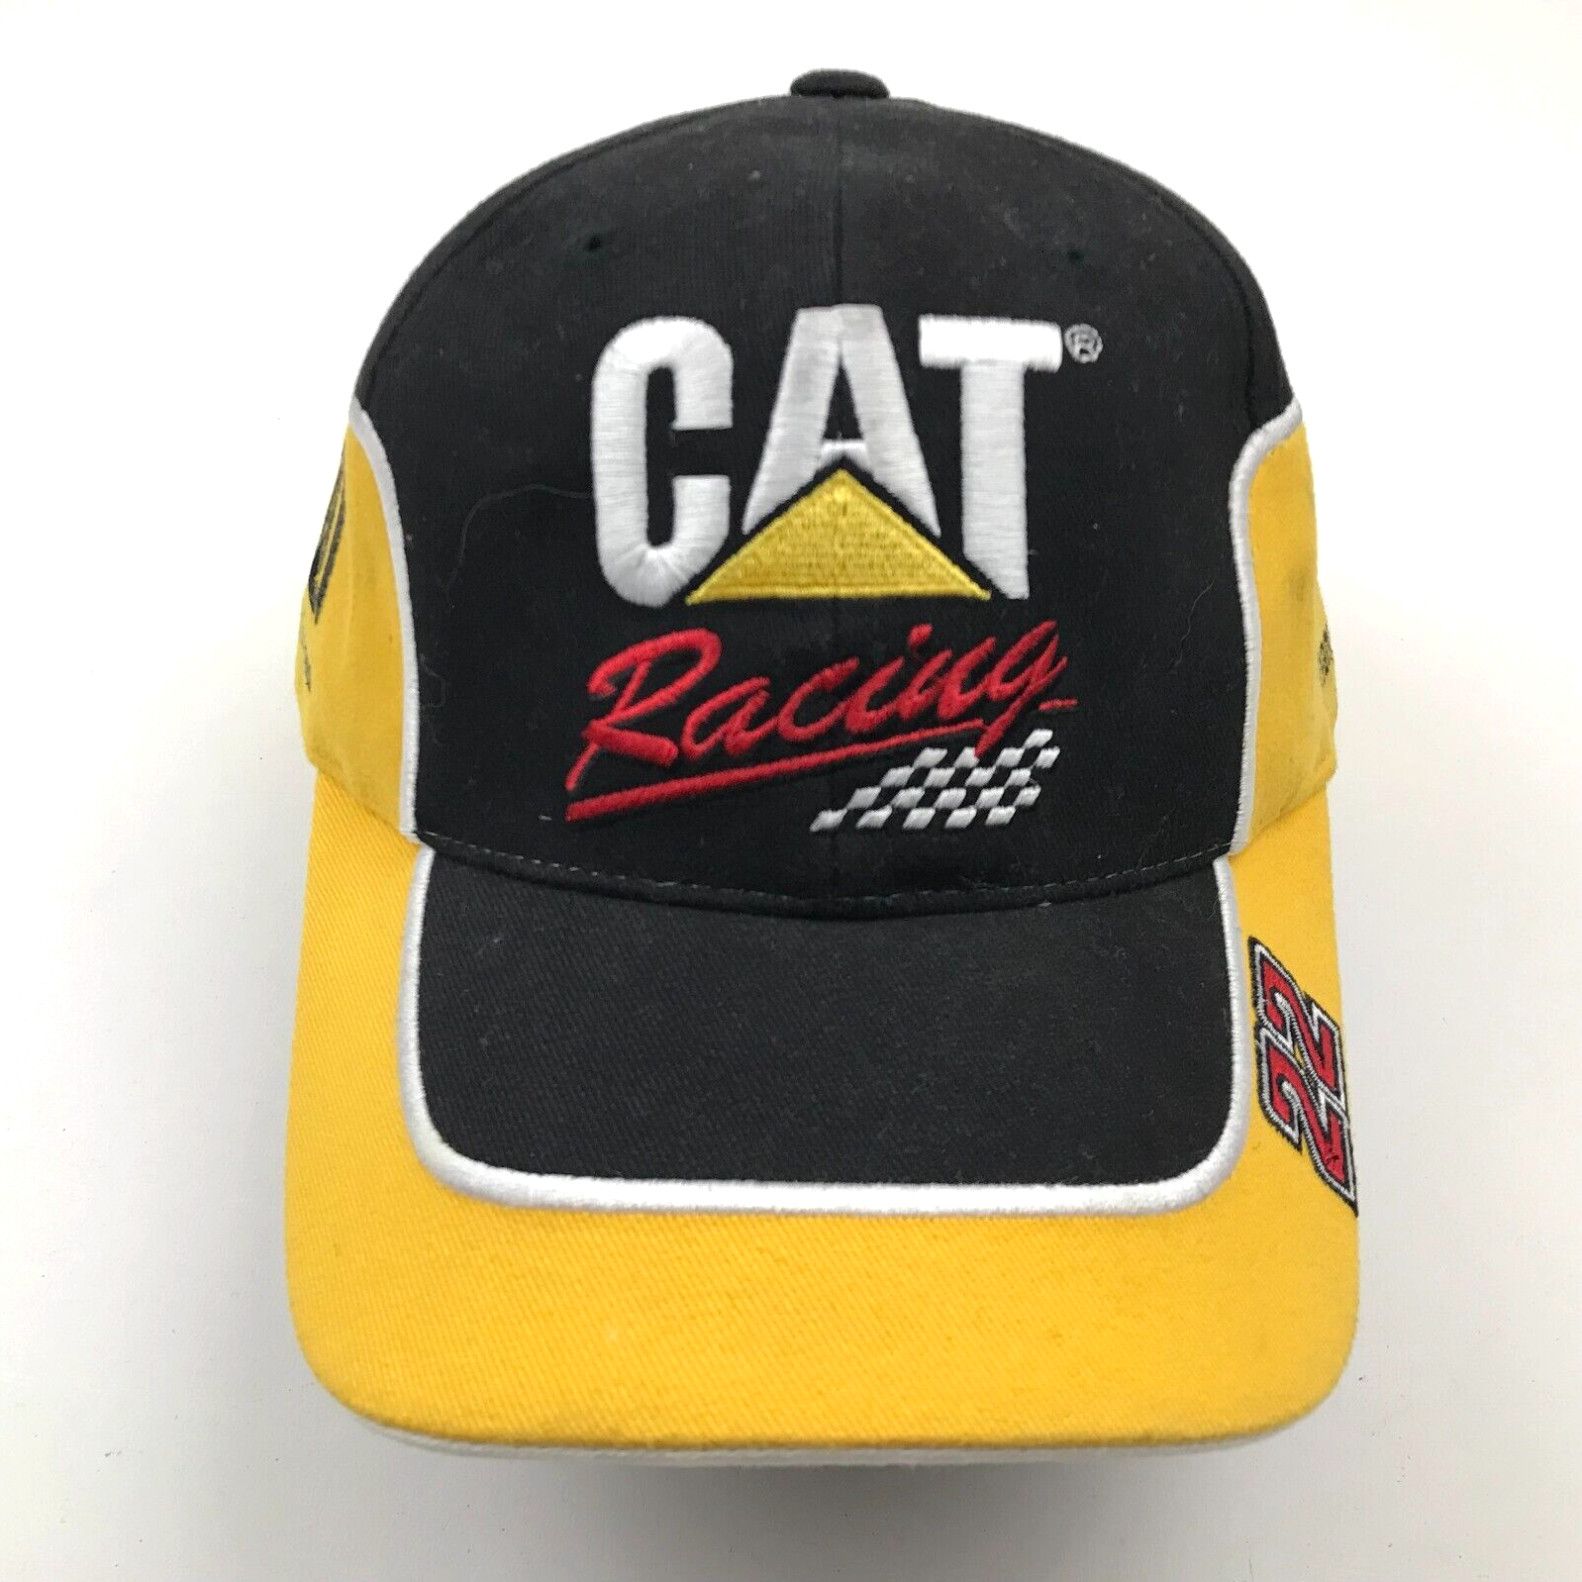 Caterpillar Caterpillar Hat Cap Stretch Fit Black Yellow Embroidered Cat  Adult Workwear Work